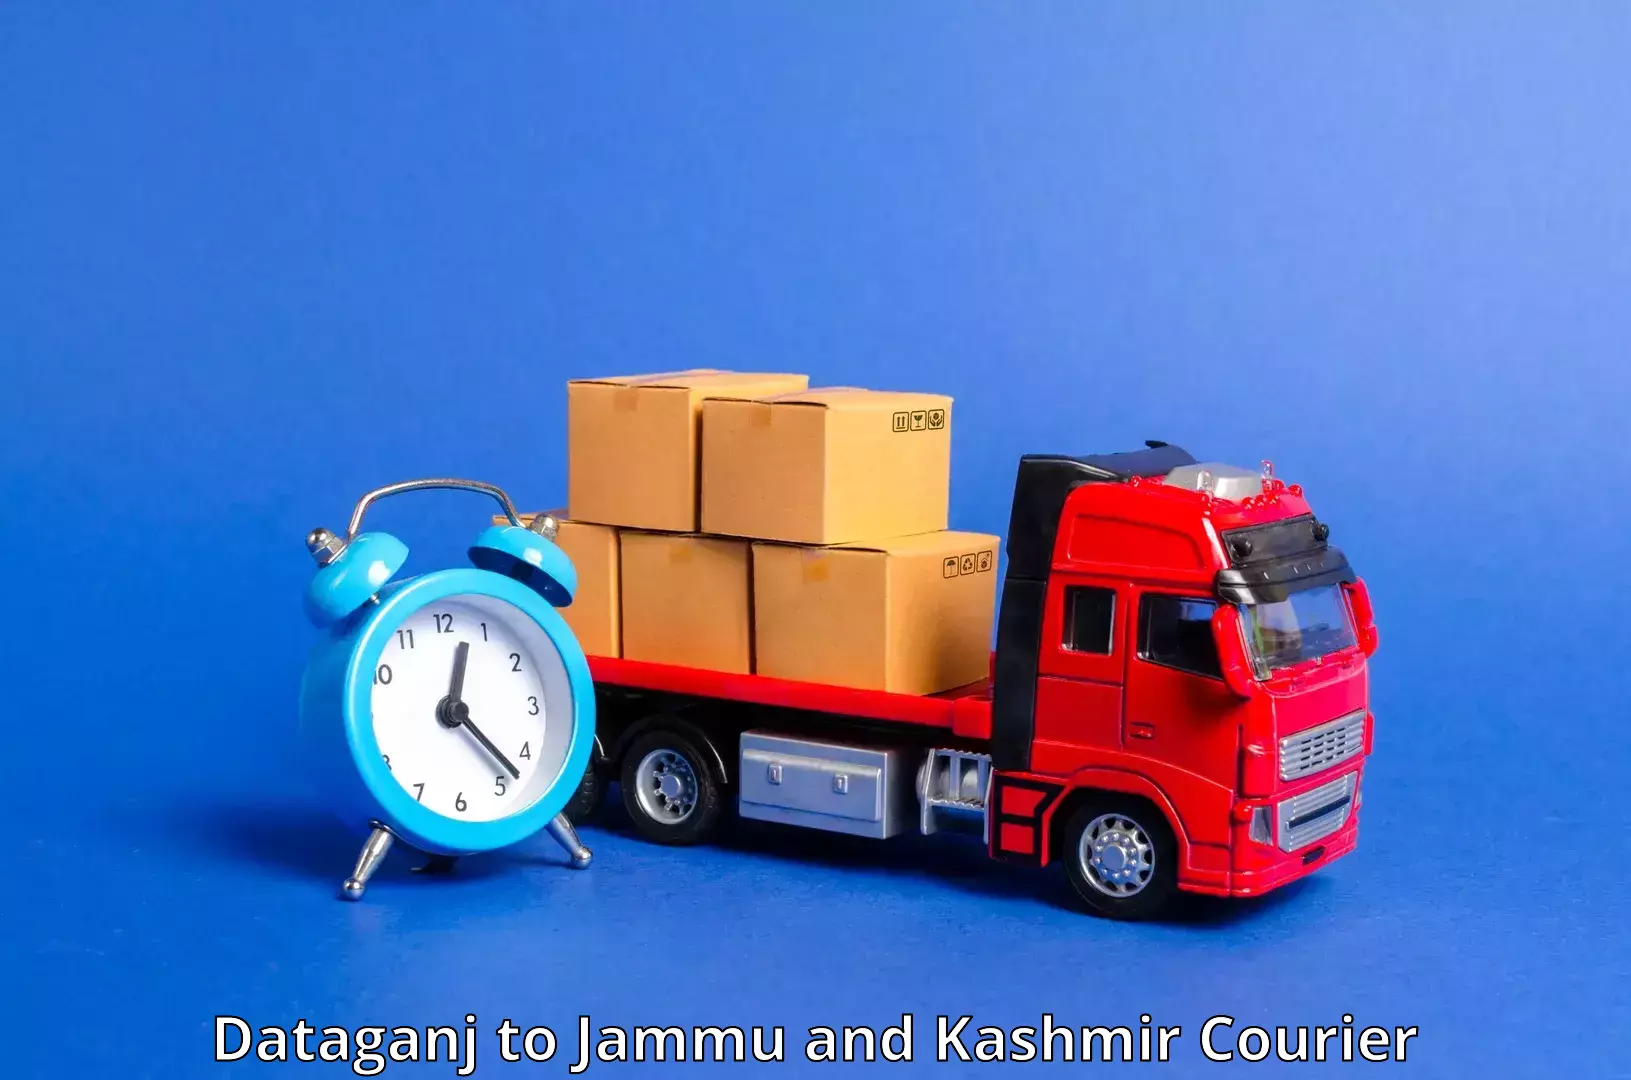 Package delivery network Dataganj to Kargil